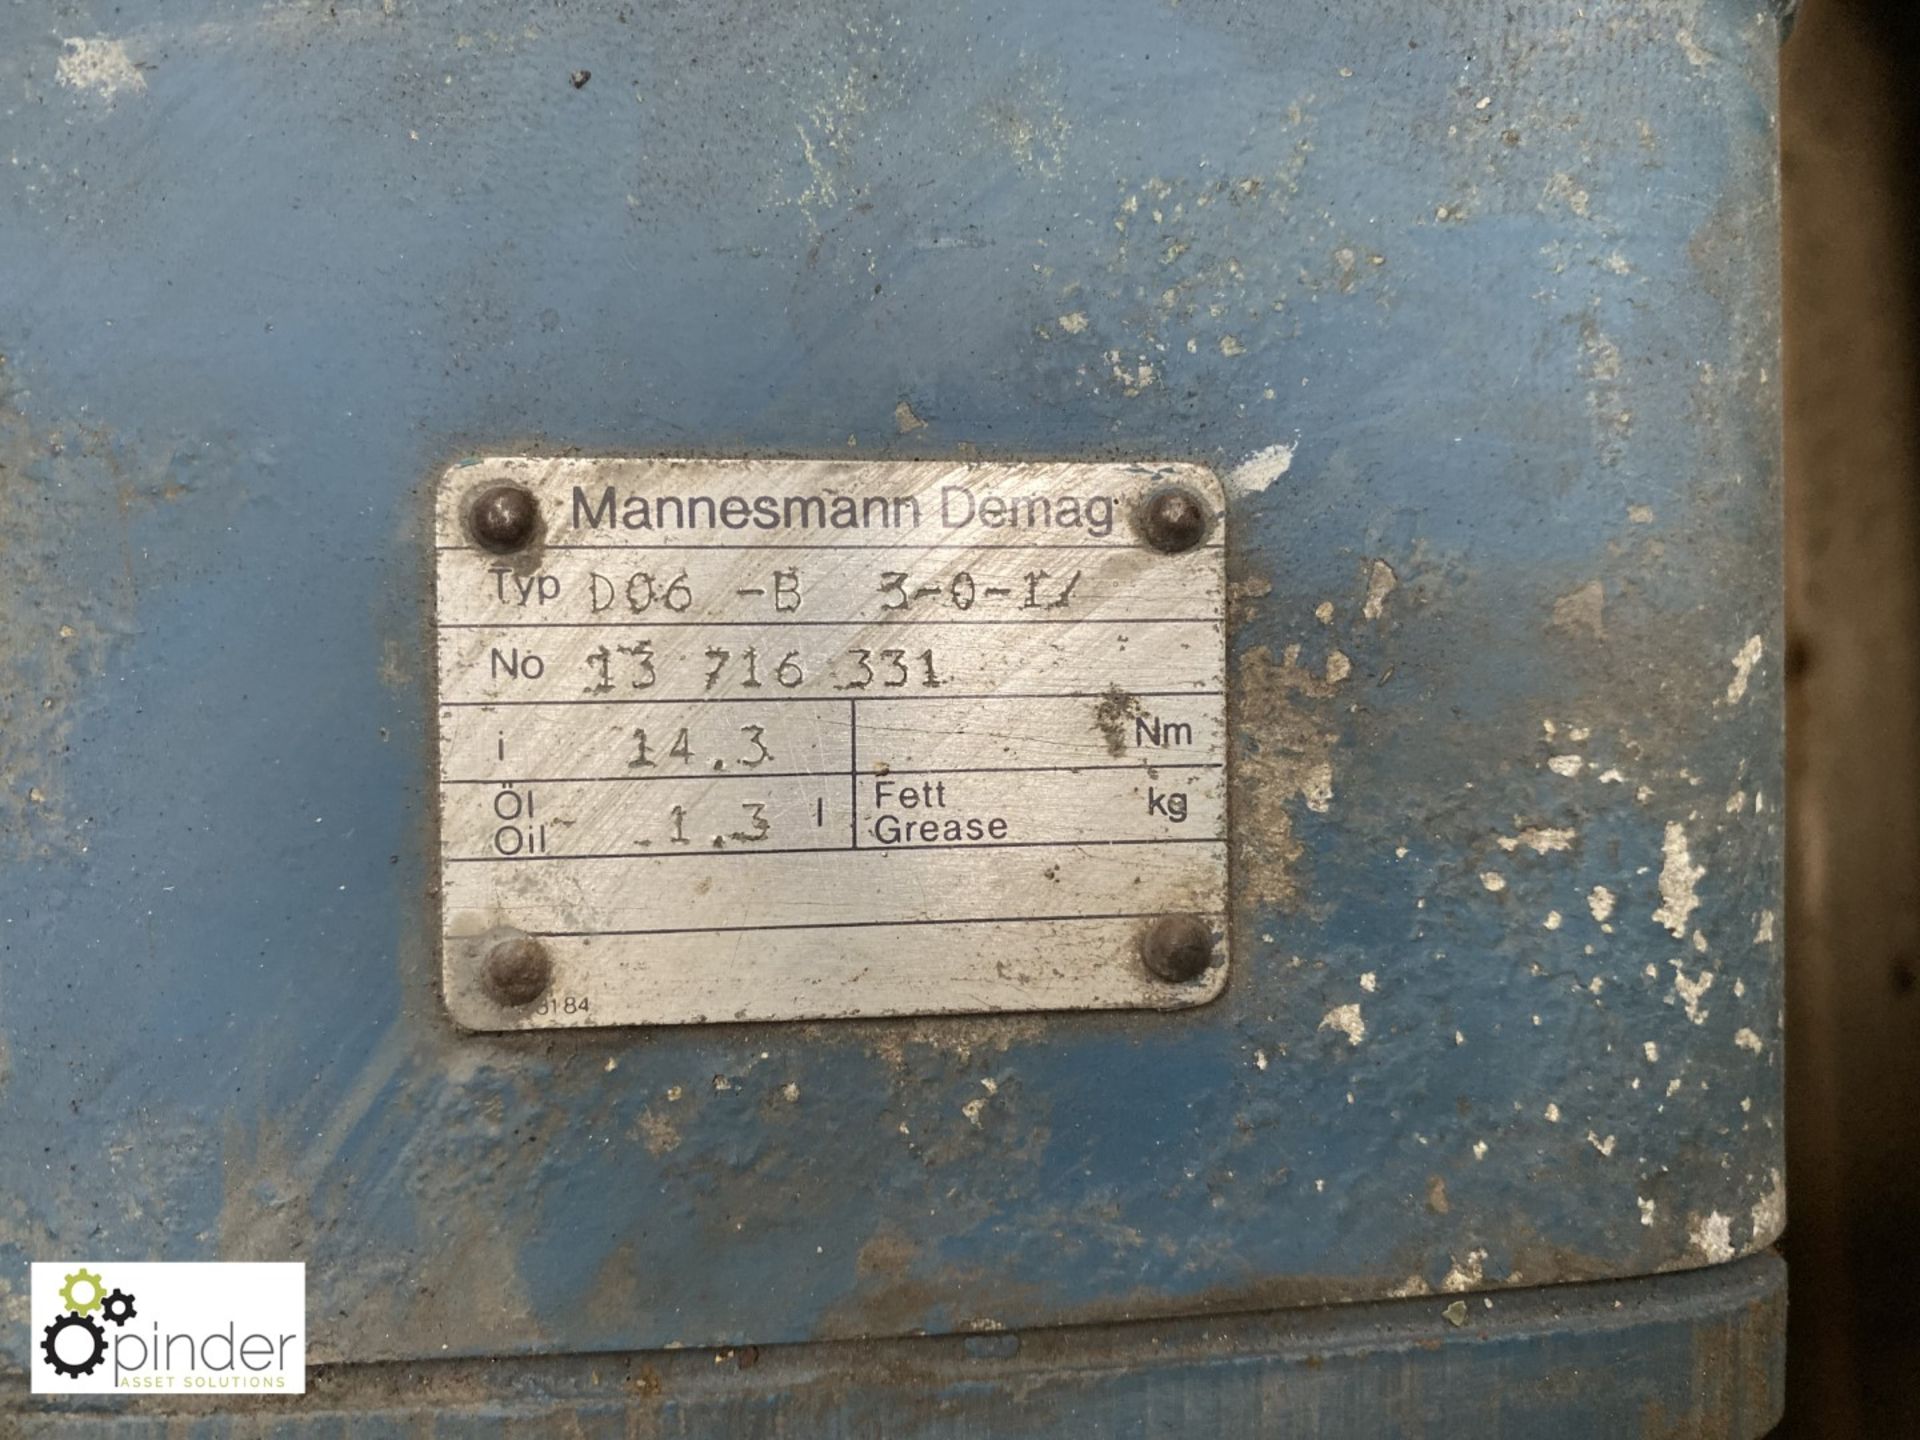 Mannesmann Demag D-06-B Geared Motor, 0.8kw - Image 2 of 2